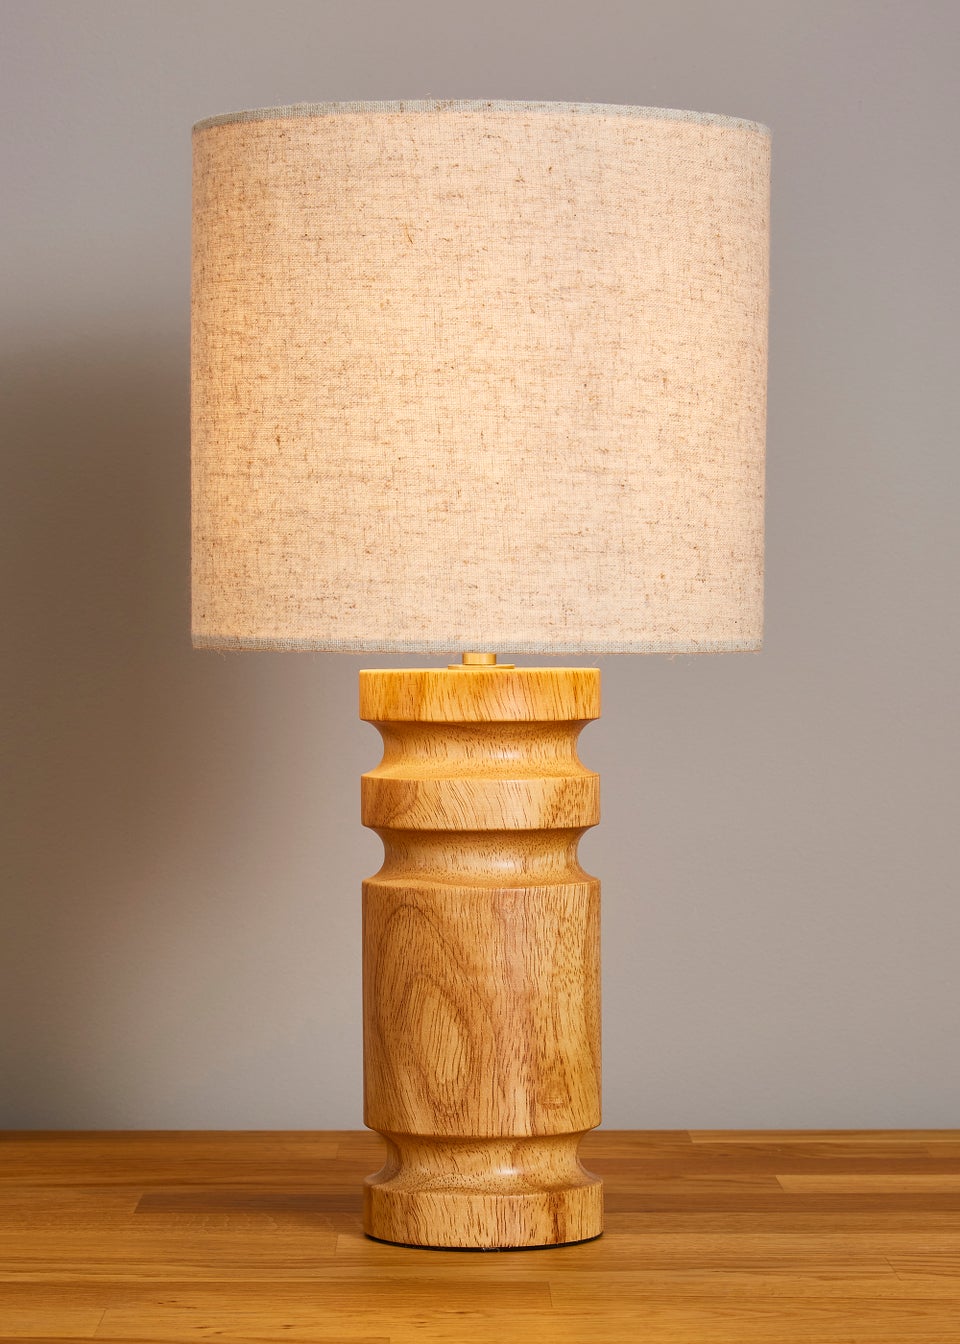 Inlight Wooden Base Table Lamp (41cm x 21cm)